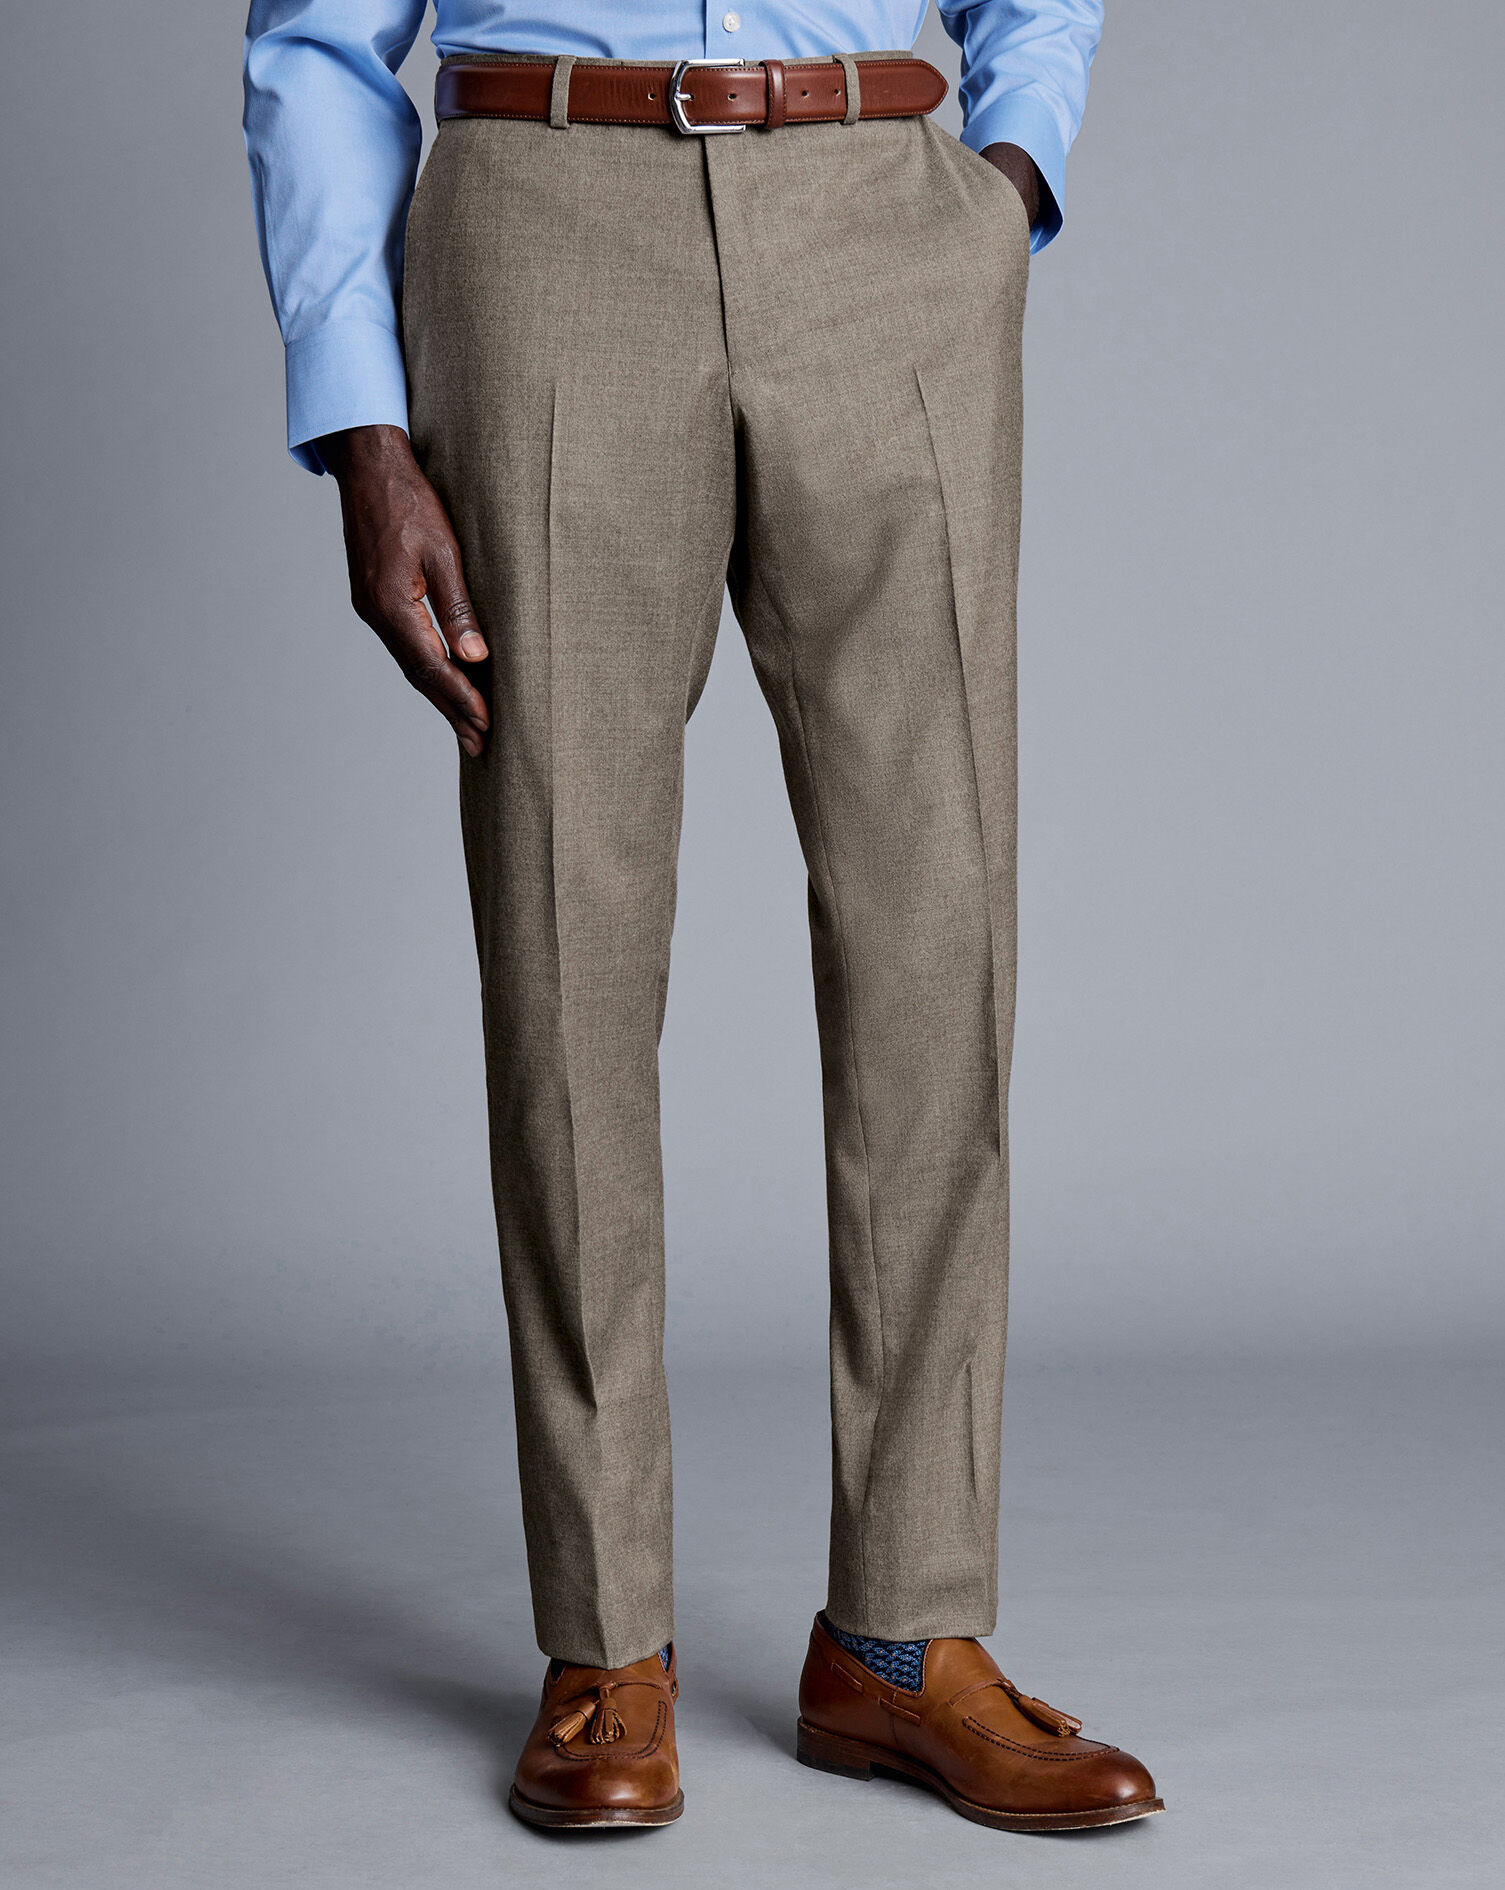 Charles Tyrwhitt 36 x 32 Slim Wool Dress Pants Slacks Trousers Pinstripe  Navy | eBay